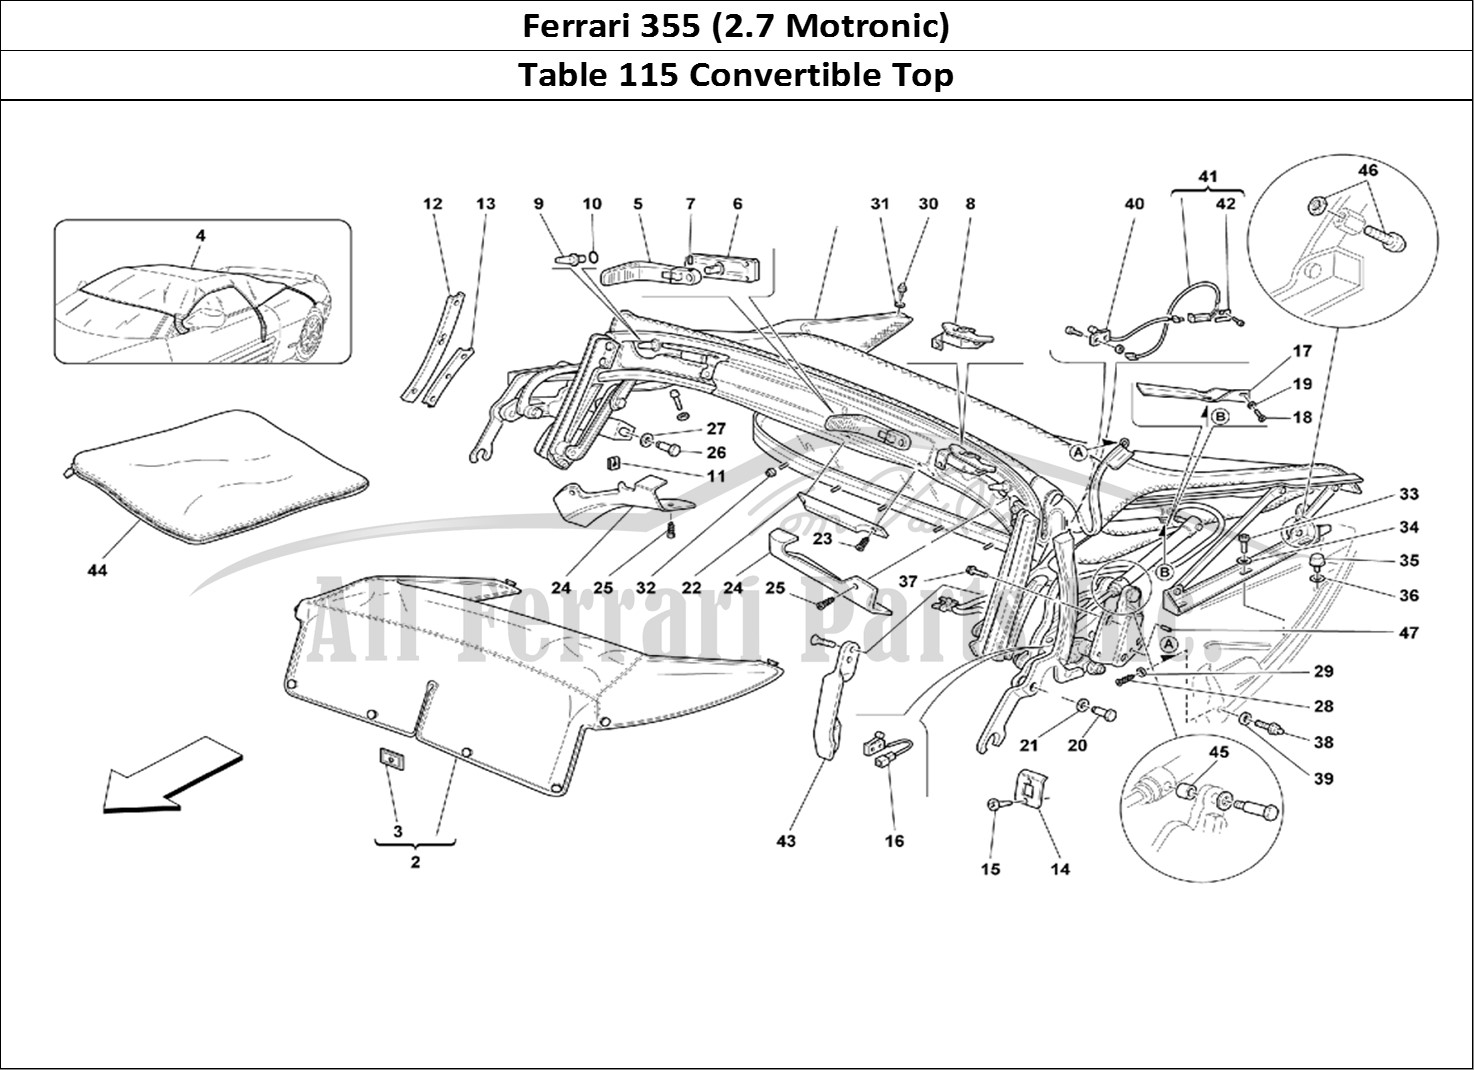 Ferrari Parts Ferrari 355 (2.7 Motronic) Page 115 Top -Valid for Spider